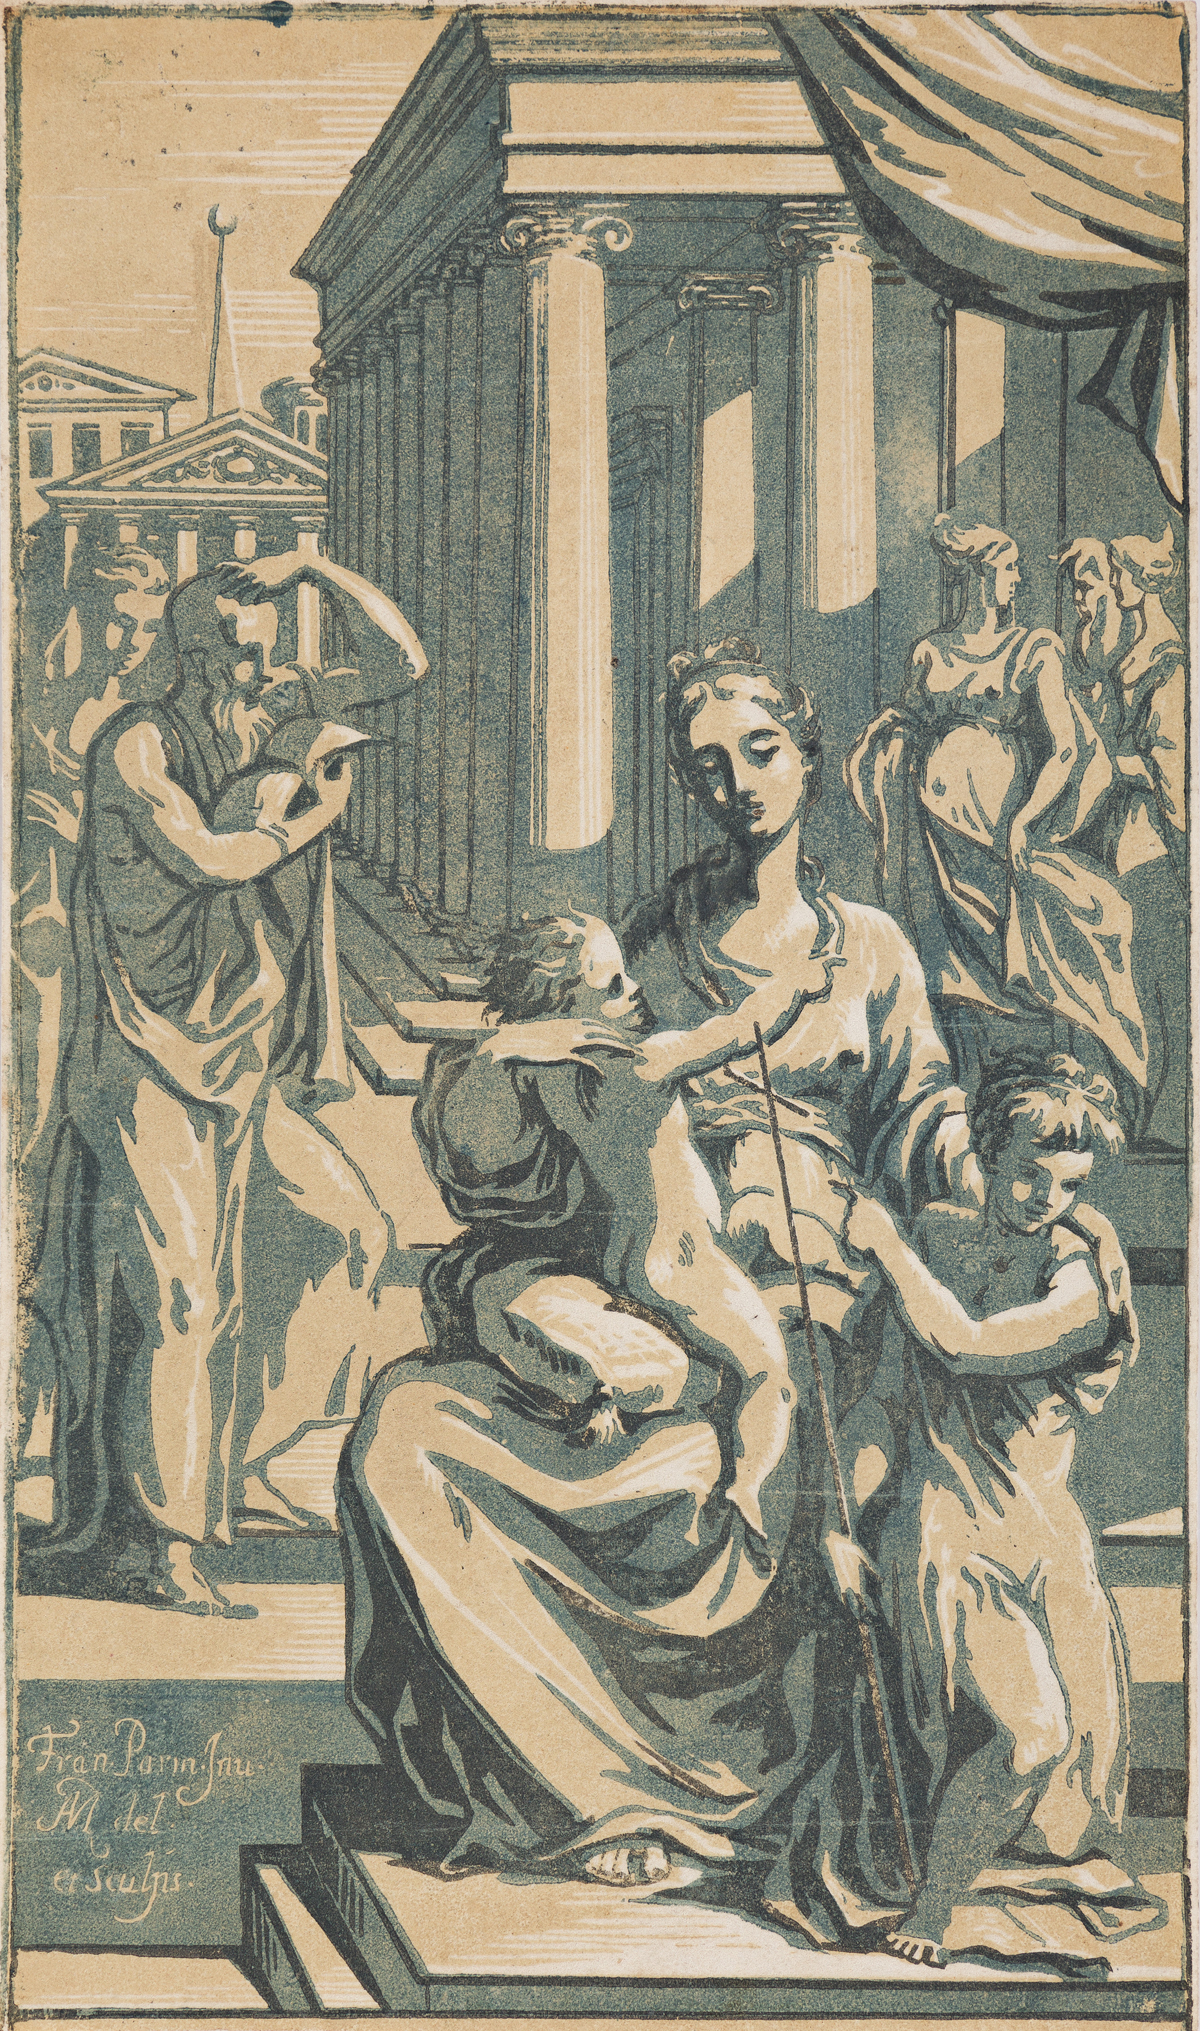 ANTONIO MARIA ZANETTI (after Parmigianino) The Virgin and Child with Saint John the Baptist